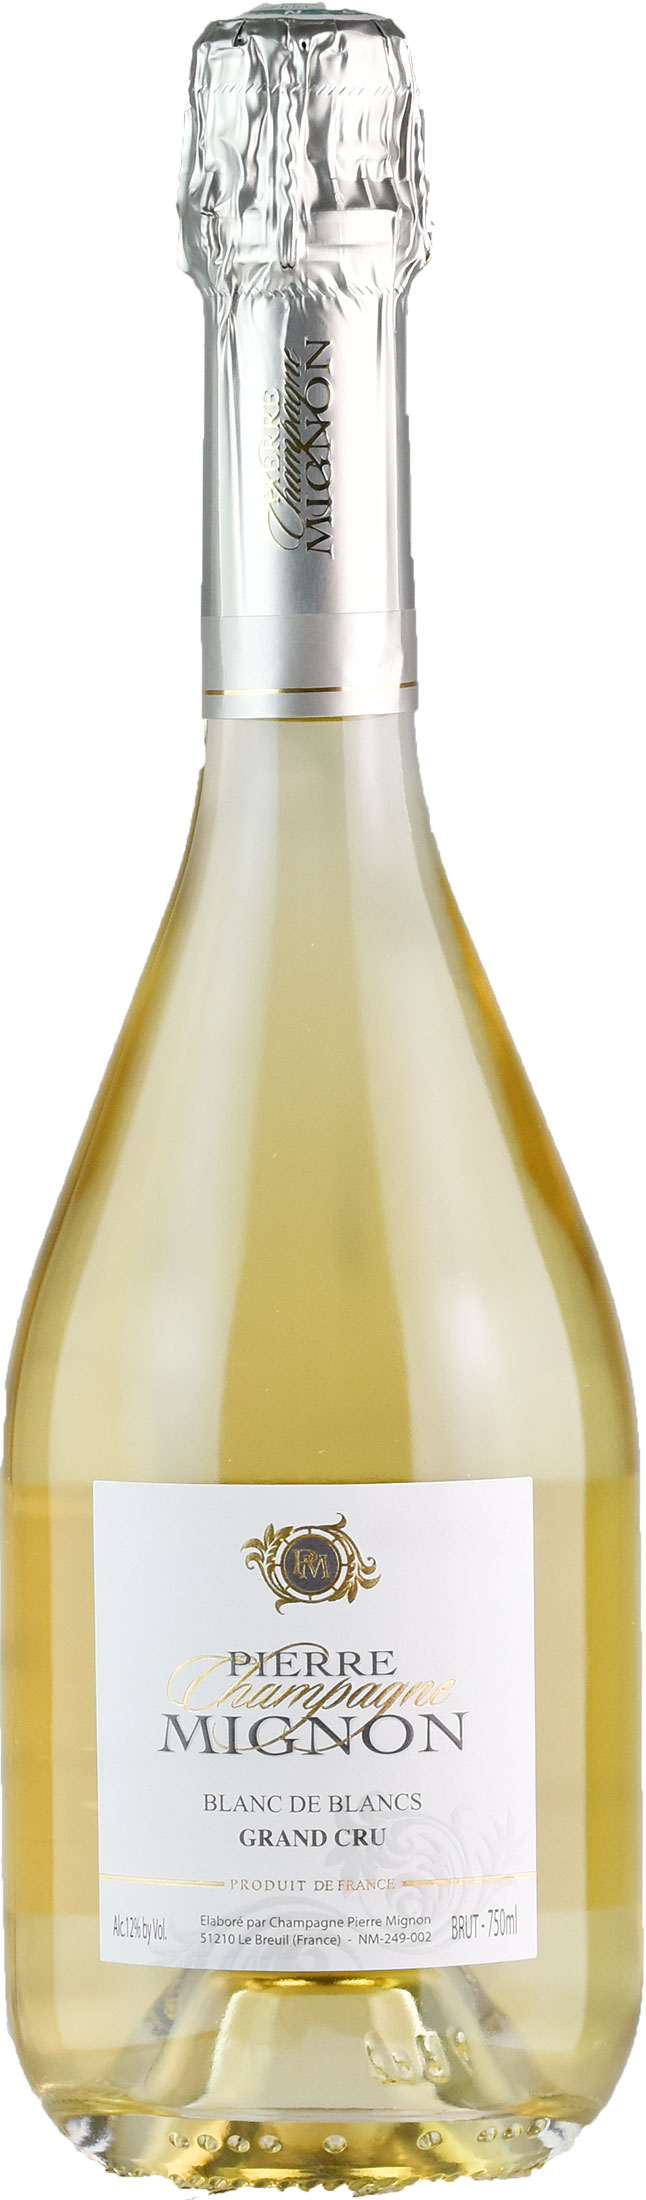 Pierre Mignon Champagne Blanc de Blancs Grand Cru Brut